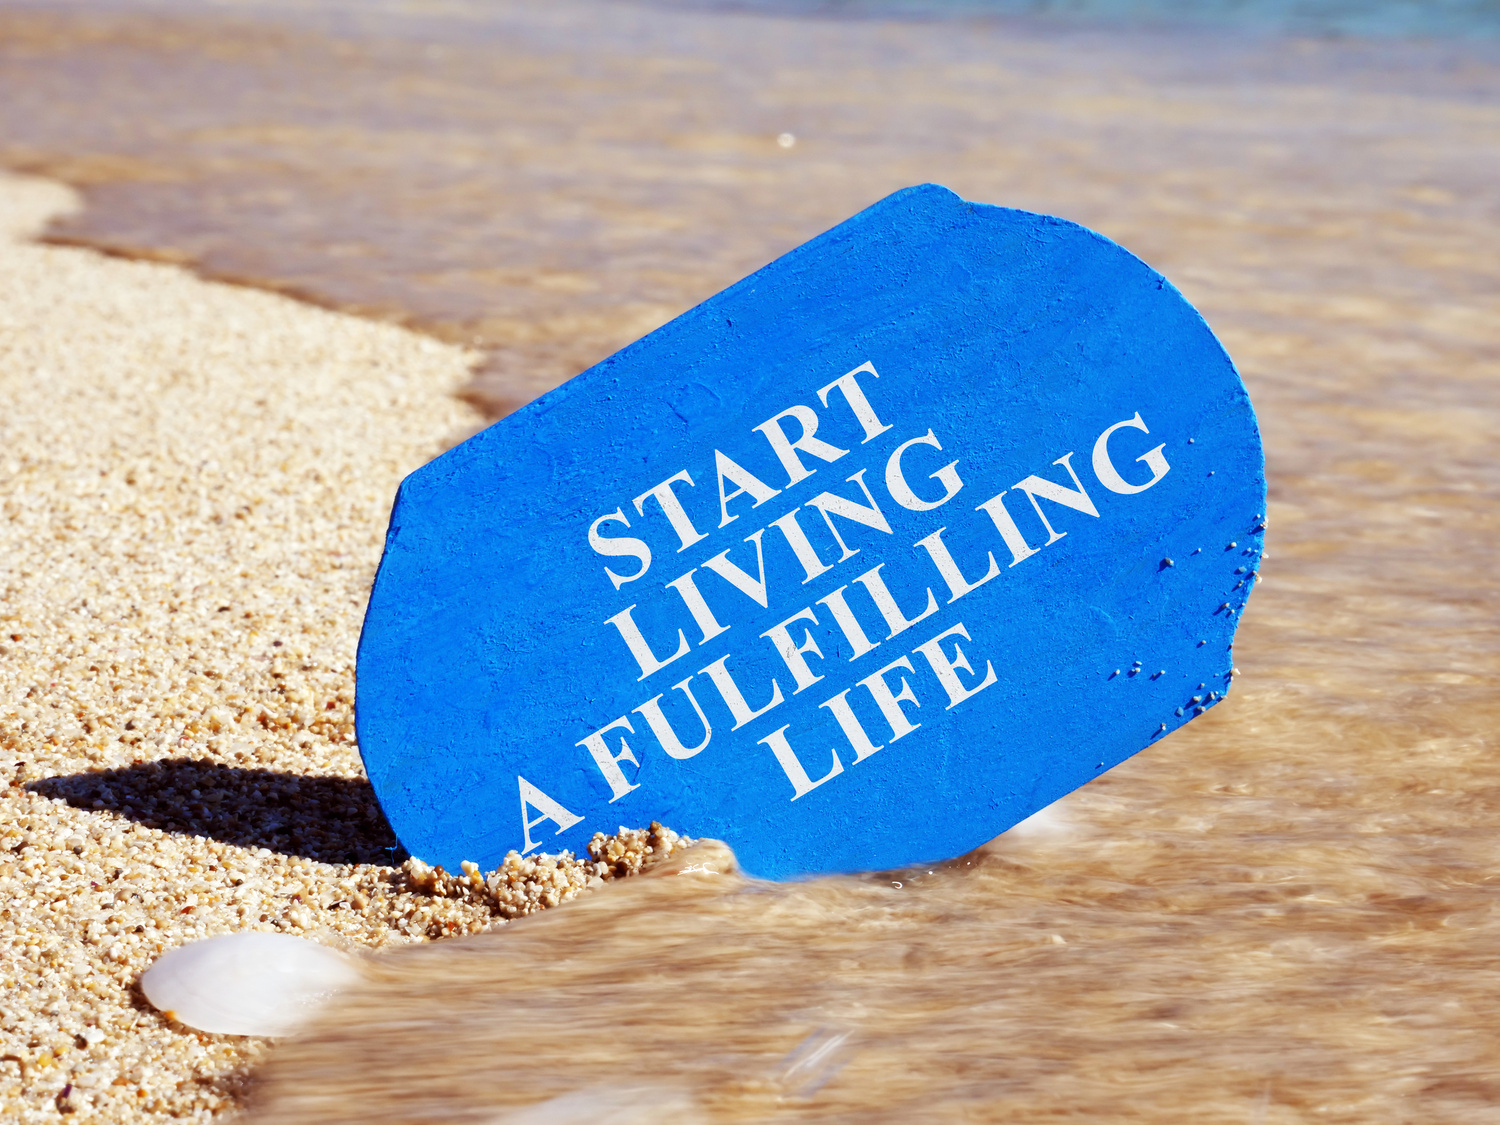 Start living a fulfilling life written on a plank.